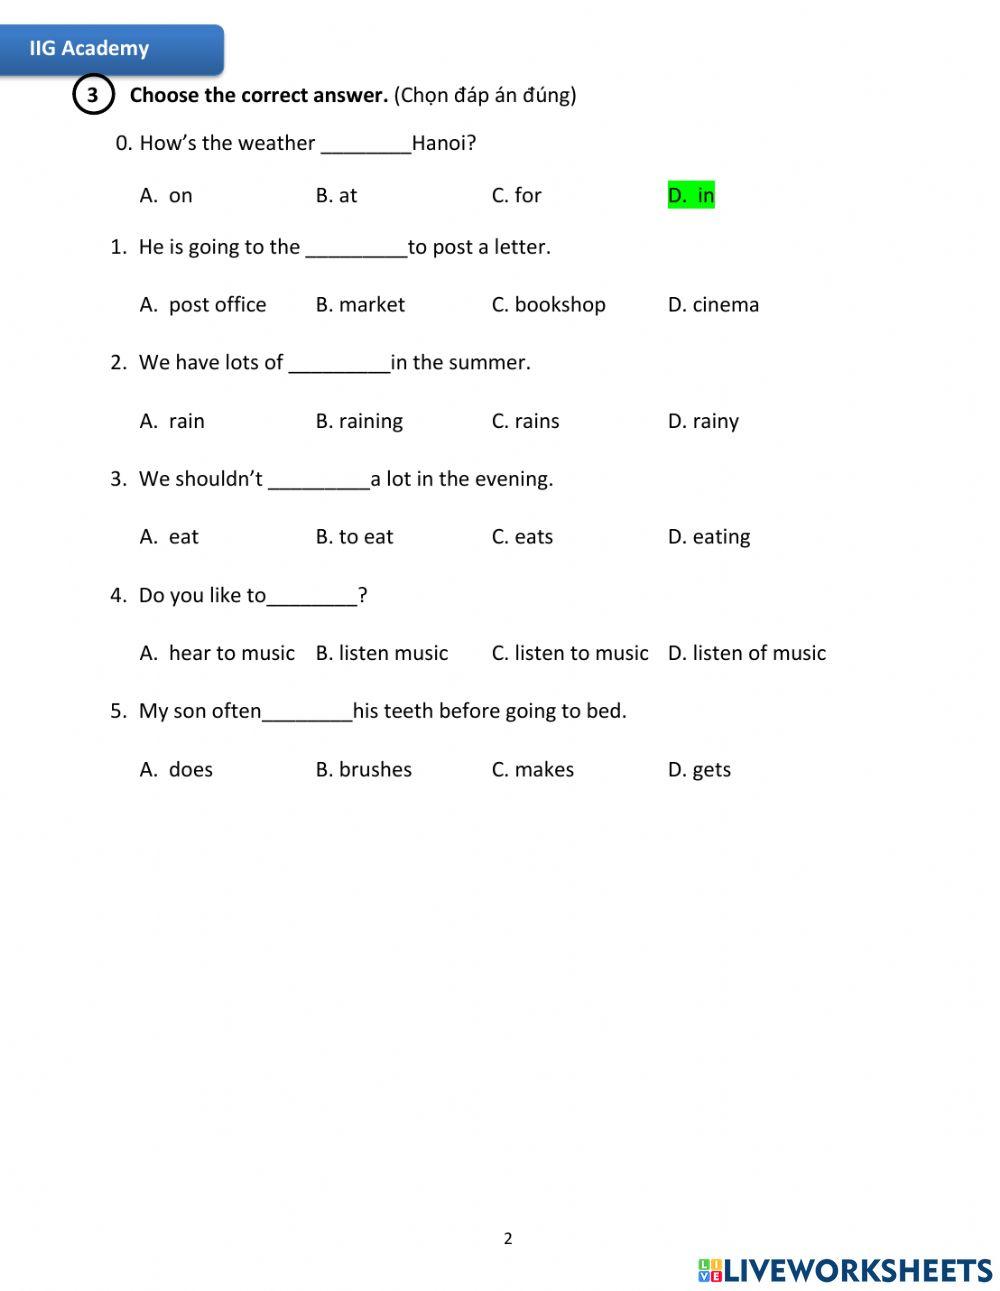 IIG-Grade 5-Worksheet 9